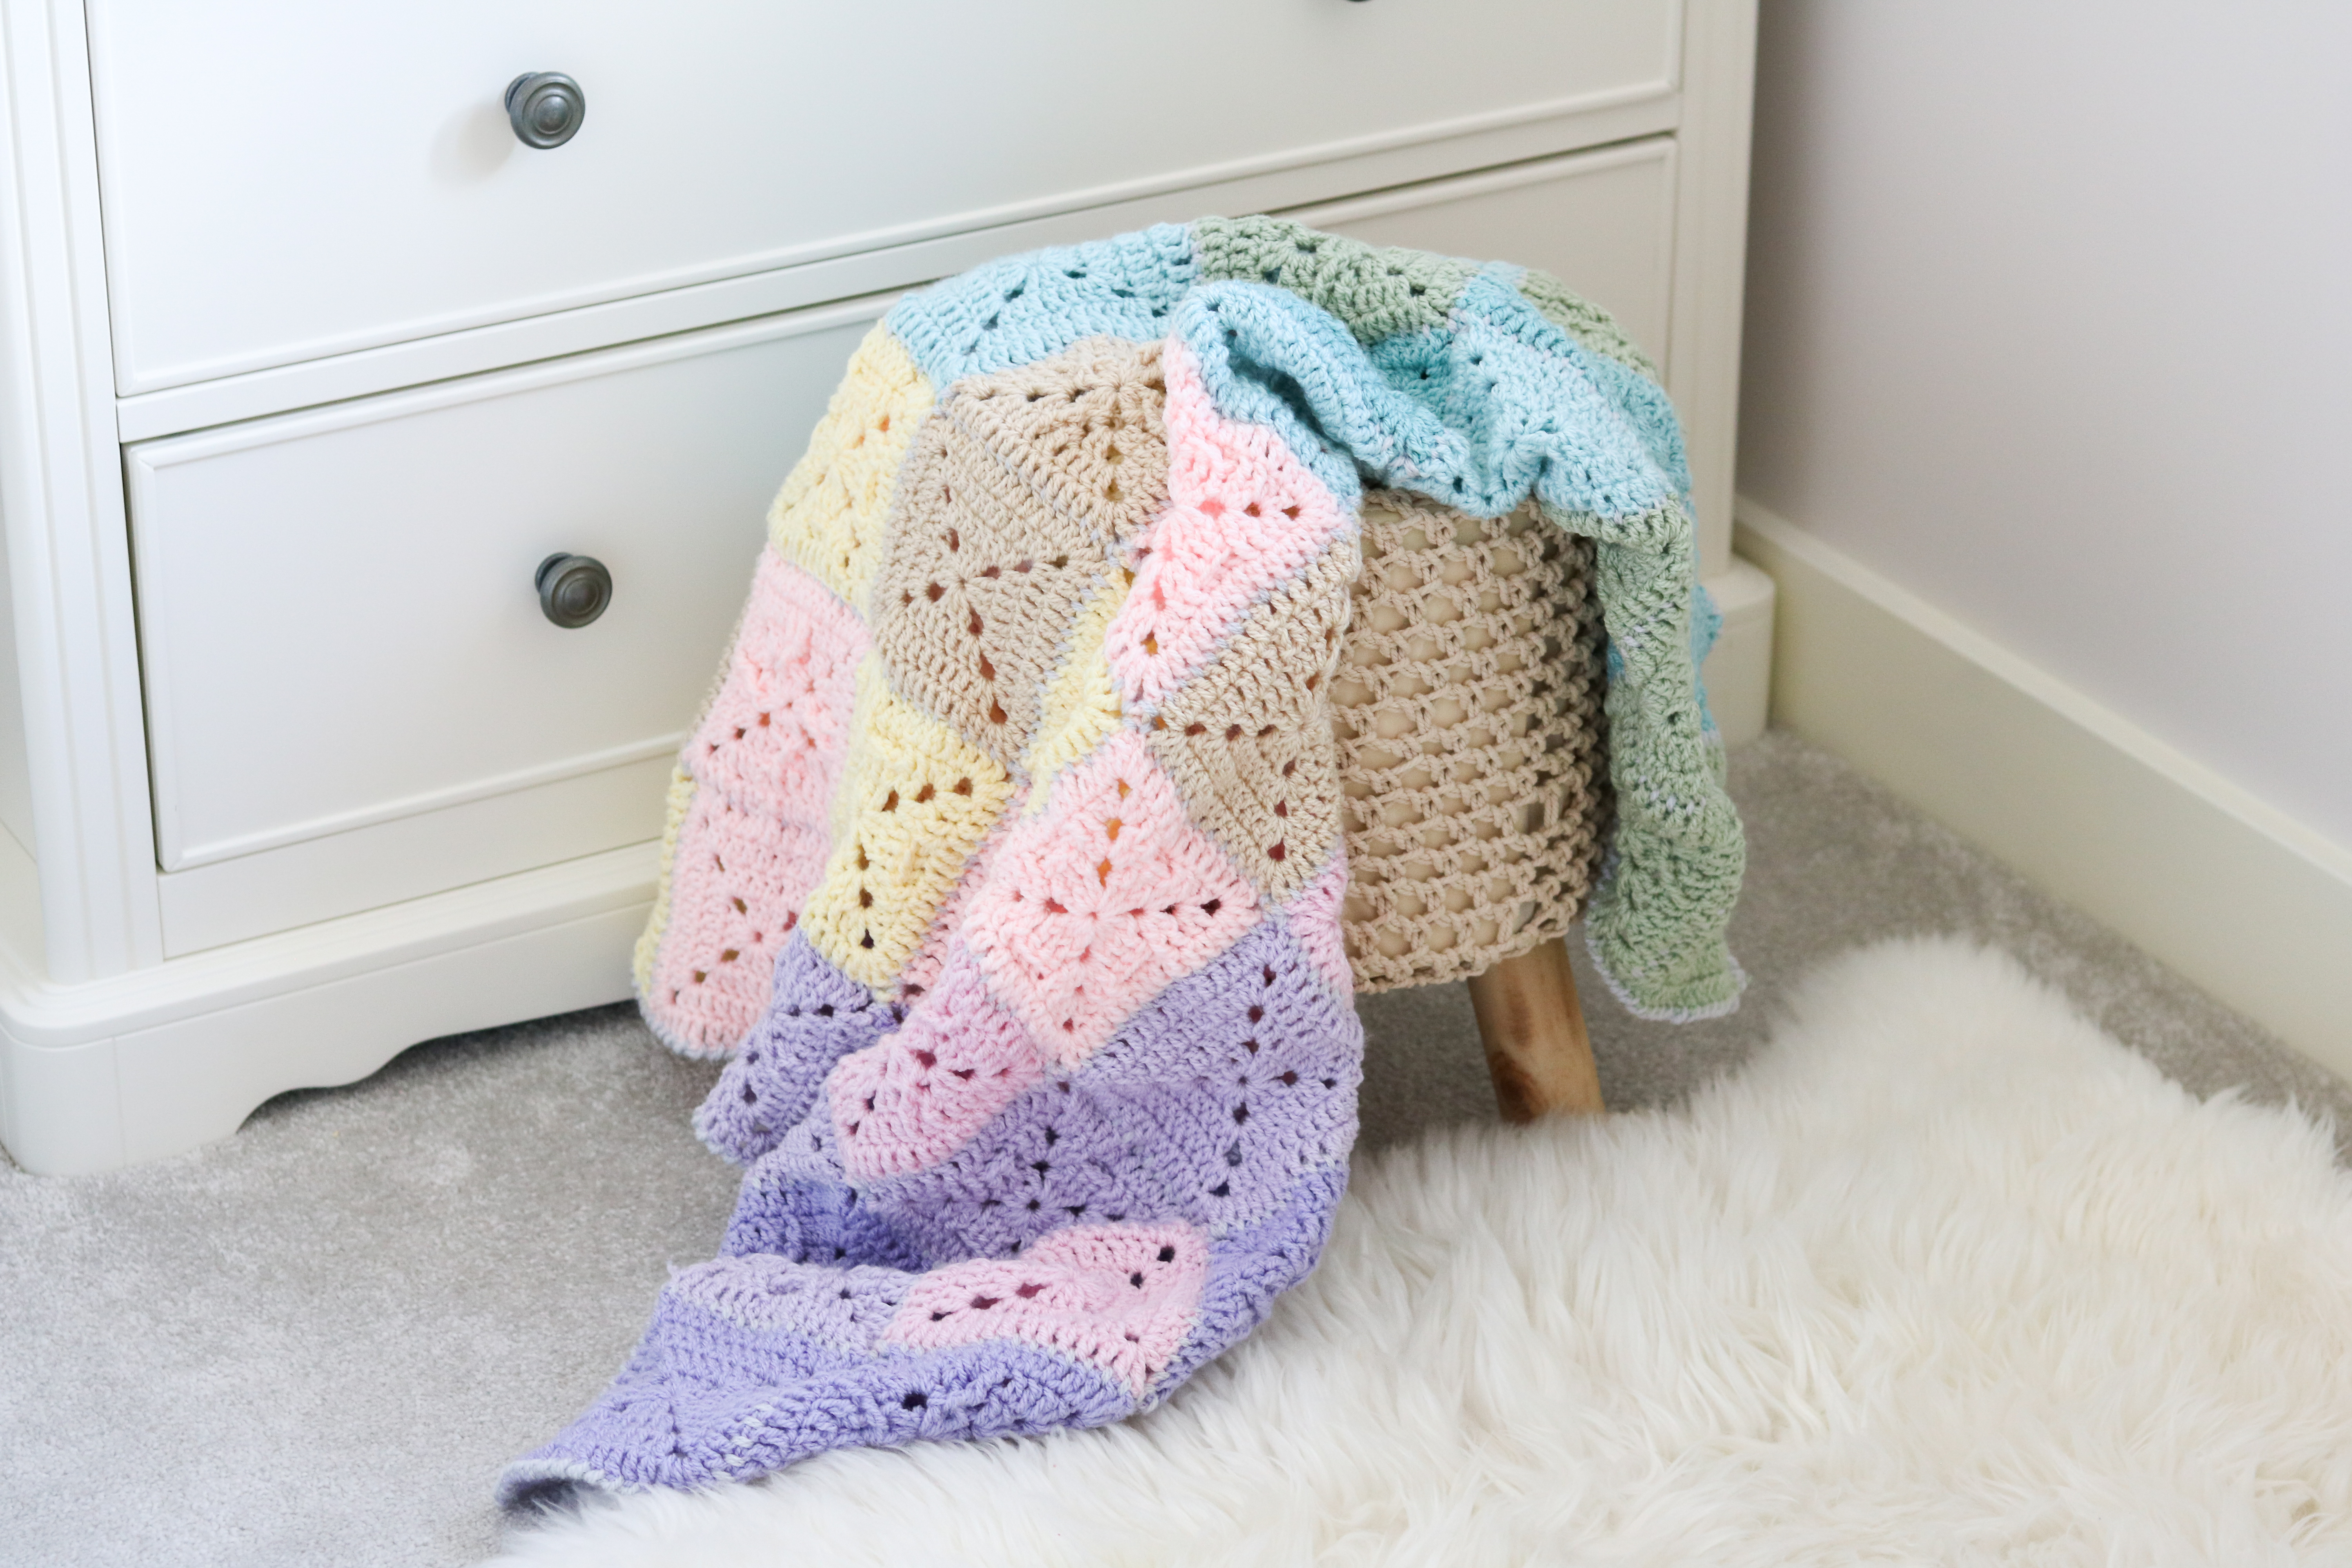 pastel crochet blanket draped over a stool